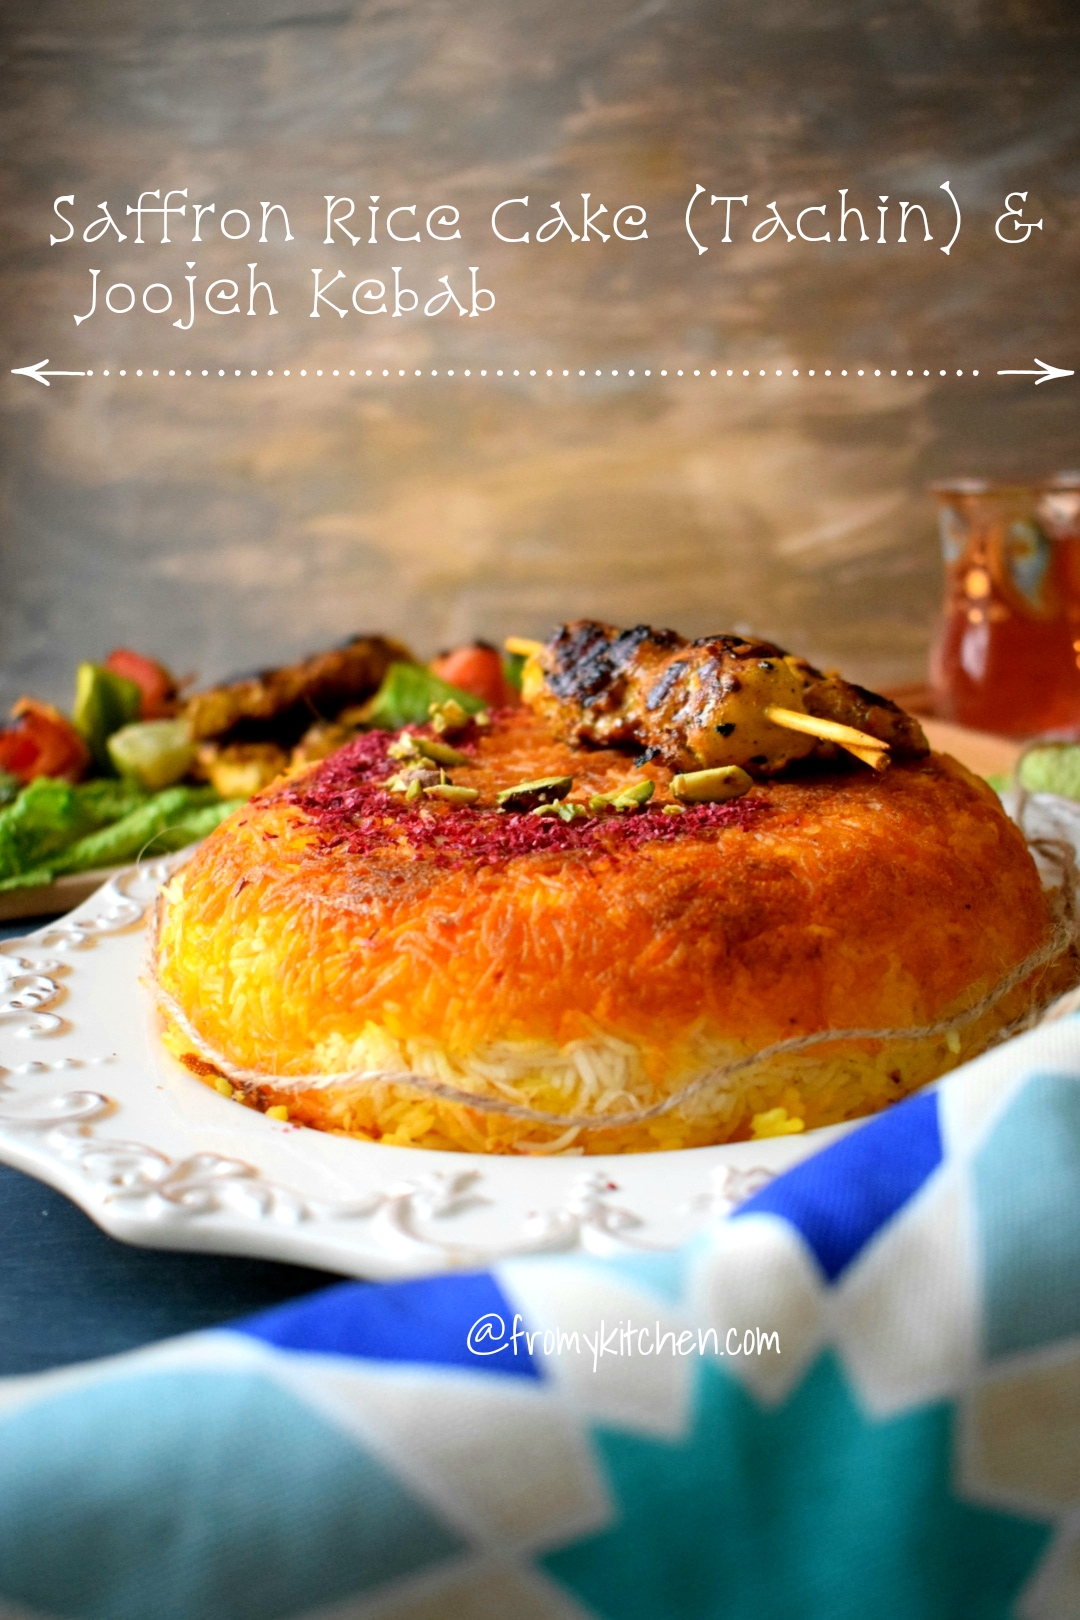 Tachin ( Saffron flavored Rice Cake) with Joojeh Kebab